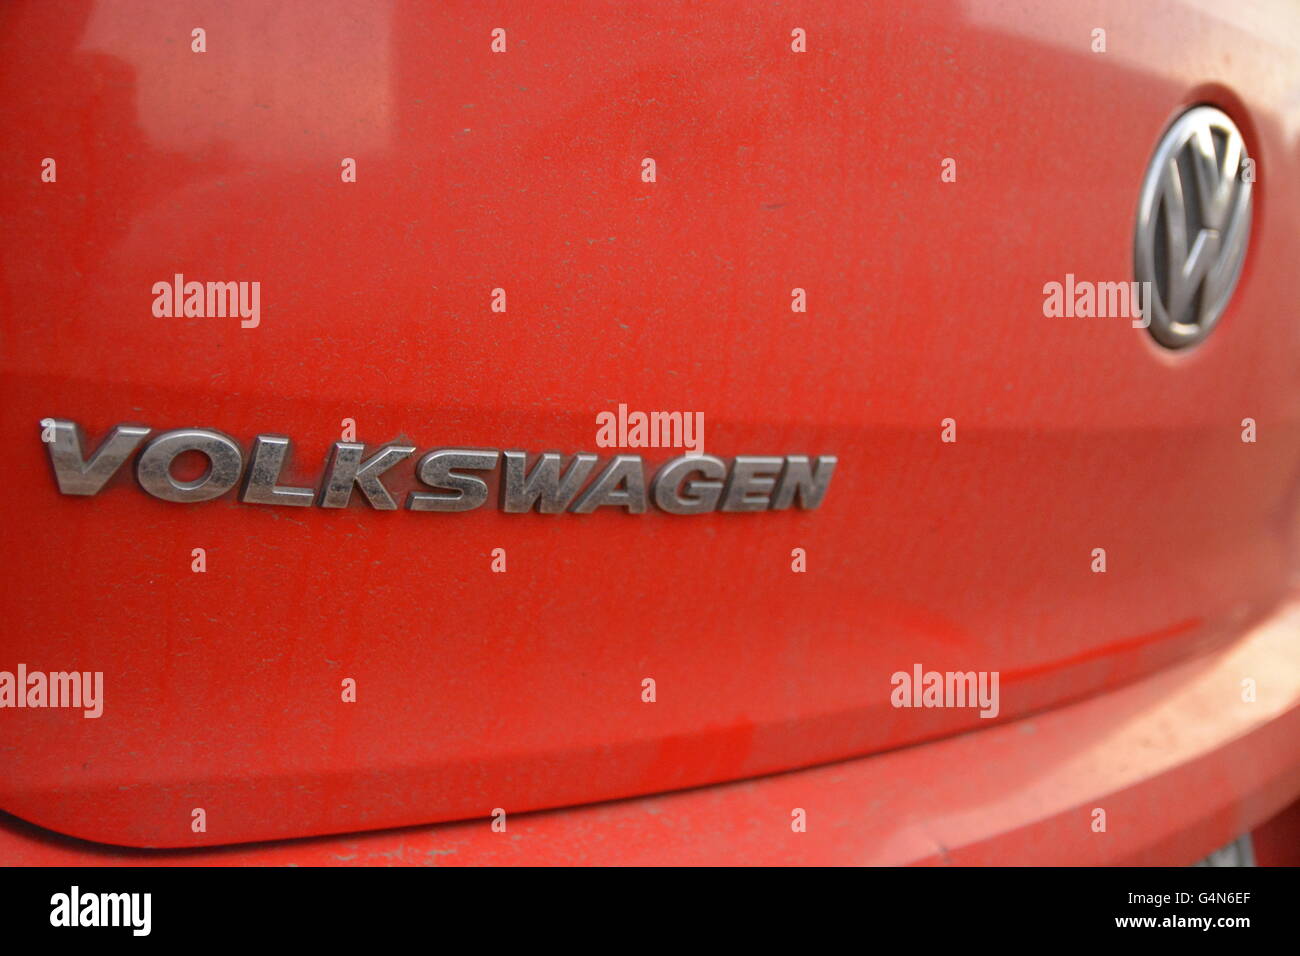 Mumbai, Inde - Novembre 6, 2015 - Volkswagen rouge Banque D'Images